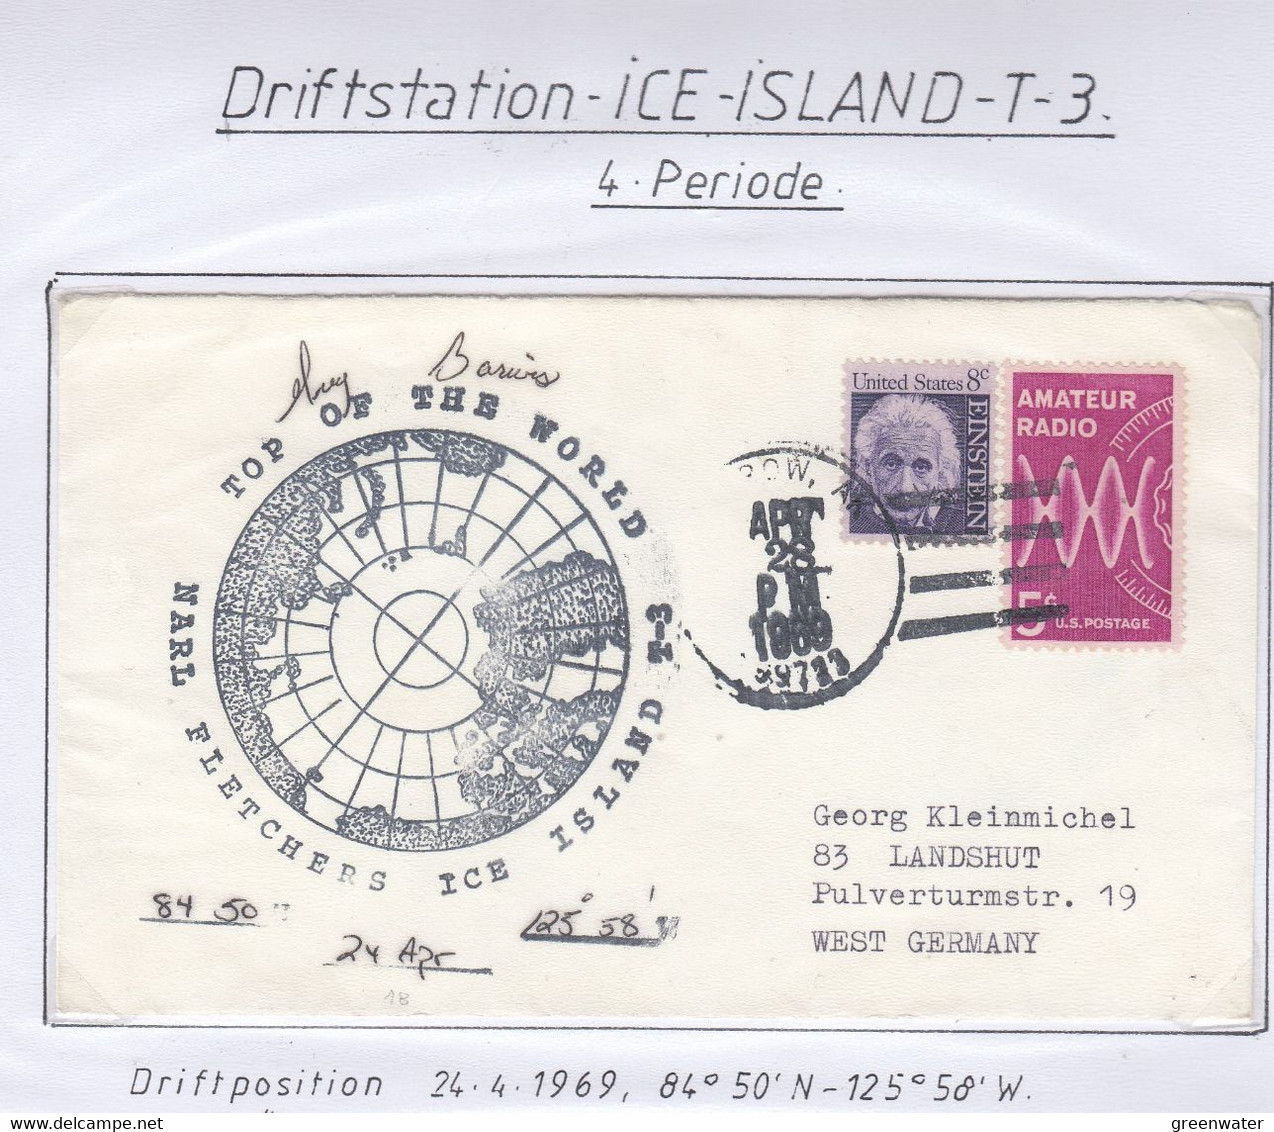 USA Driftstation ICE-ISLAND T-3 Cover  Ice Island T-3 Periode 4 Ca Apr 28 1969 Signature (DR132) - Forschungsstationen & Arctic Driftstationen